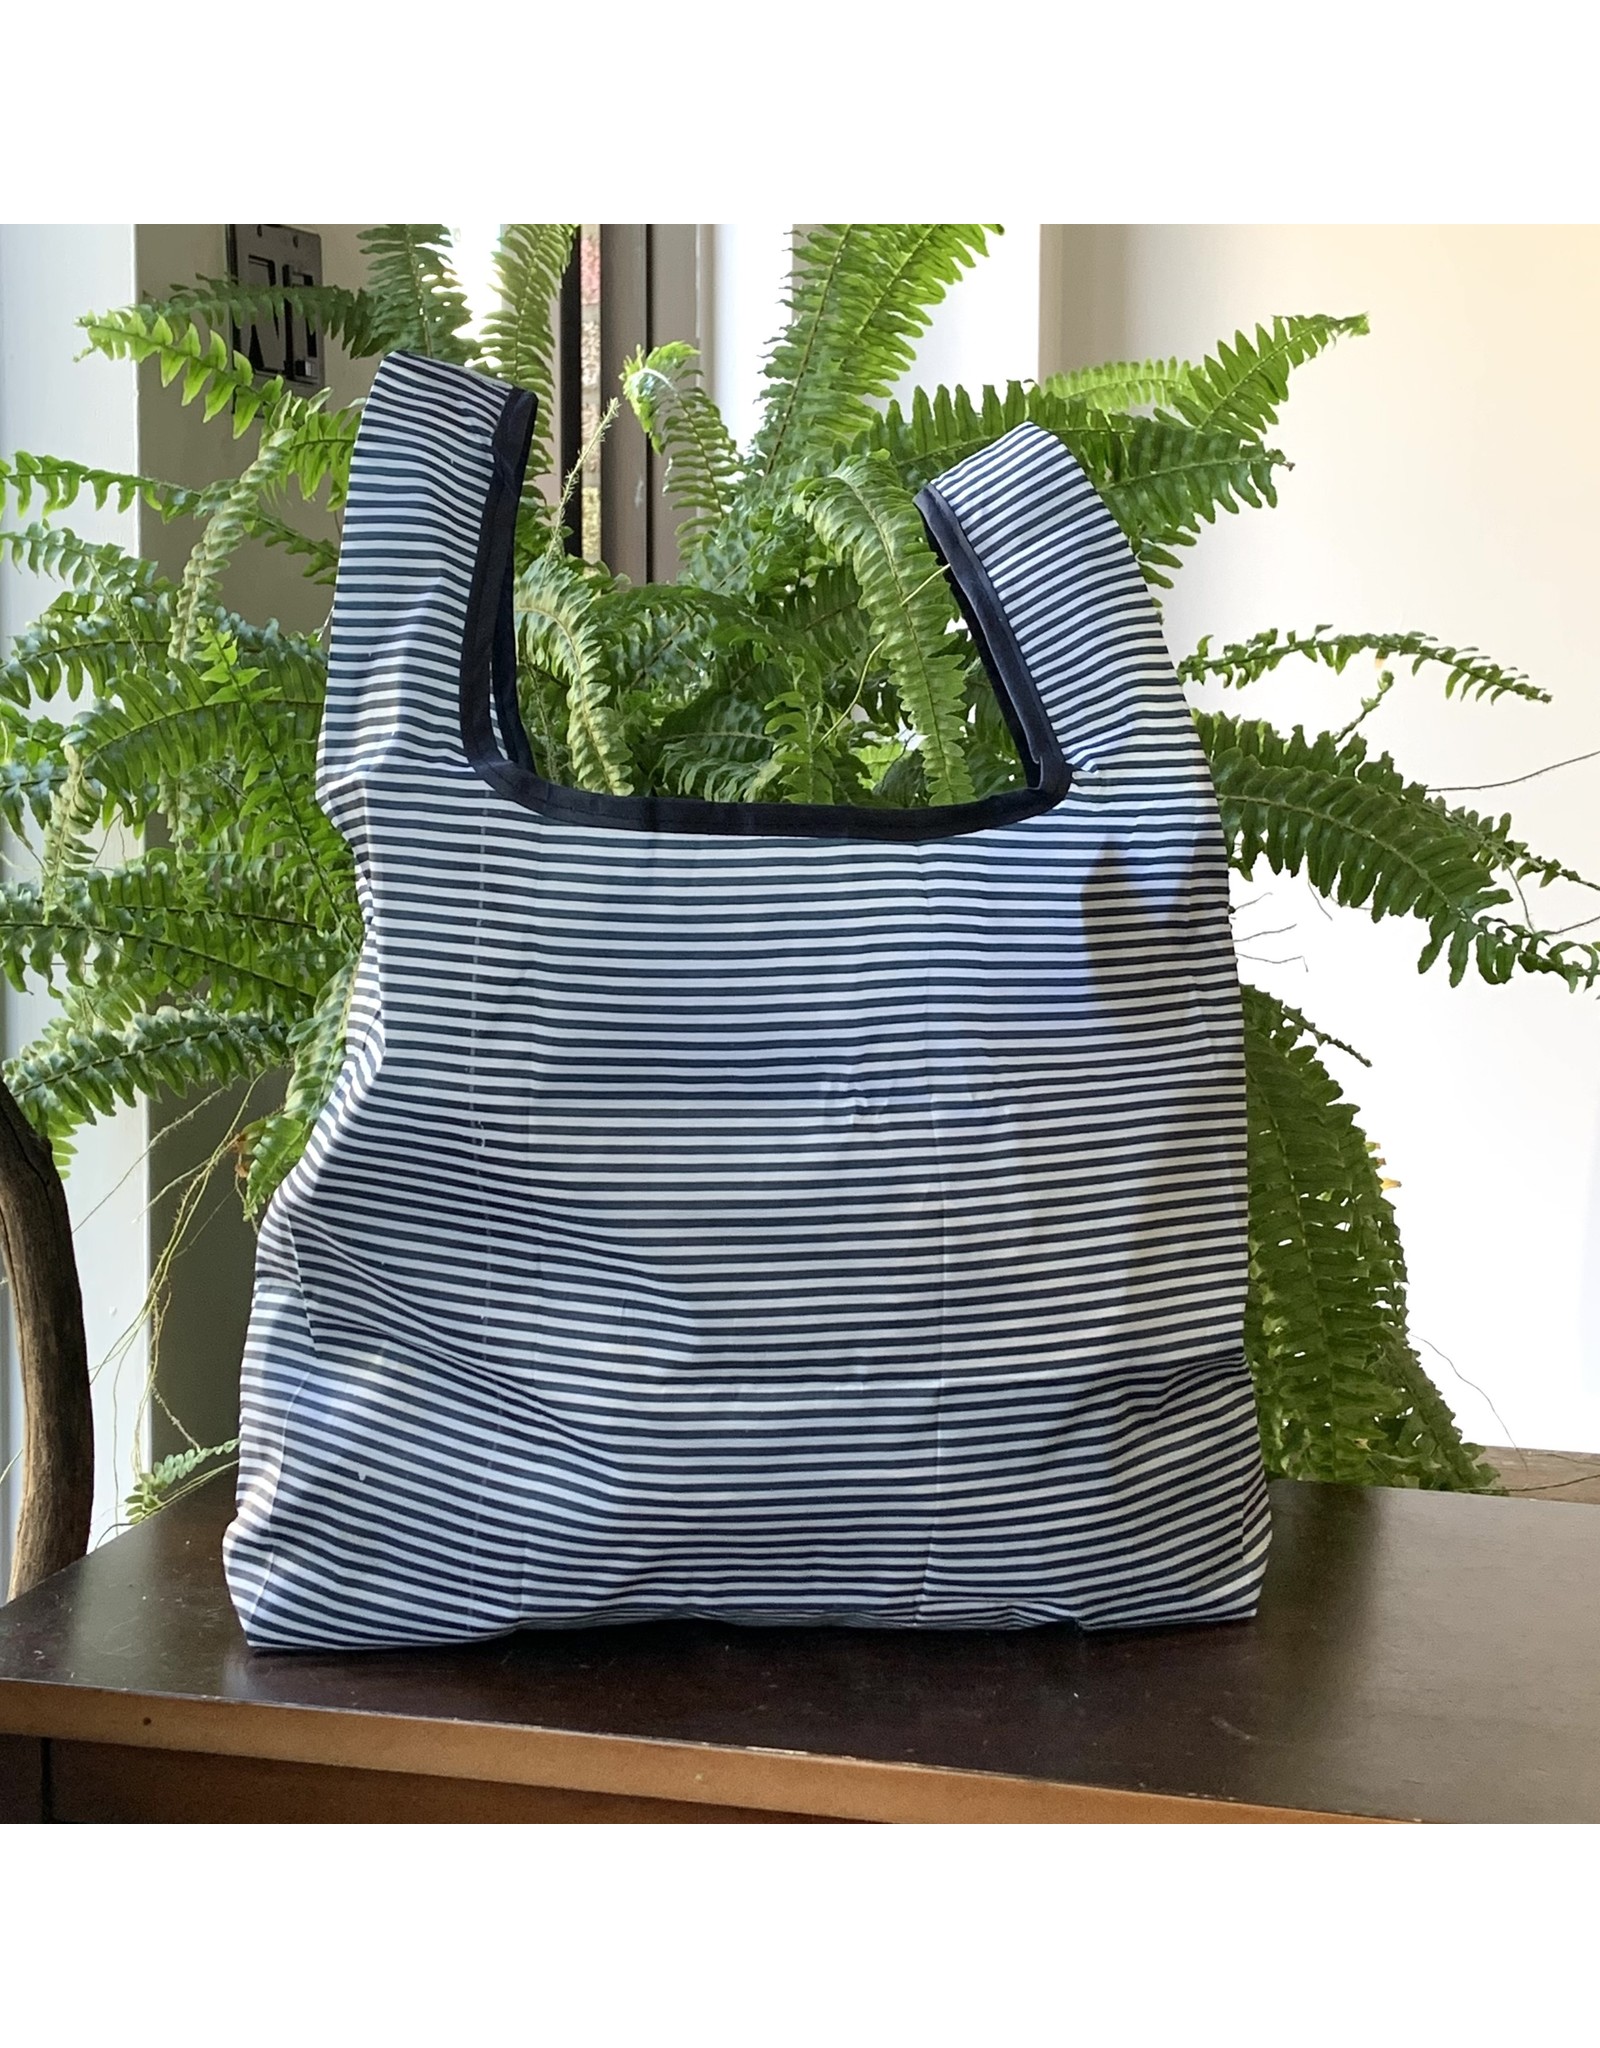 Maison Plus Foldable Shopping Bag